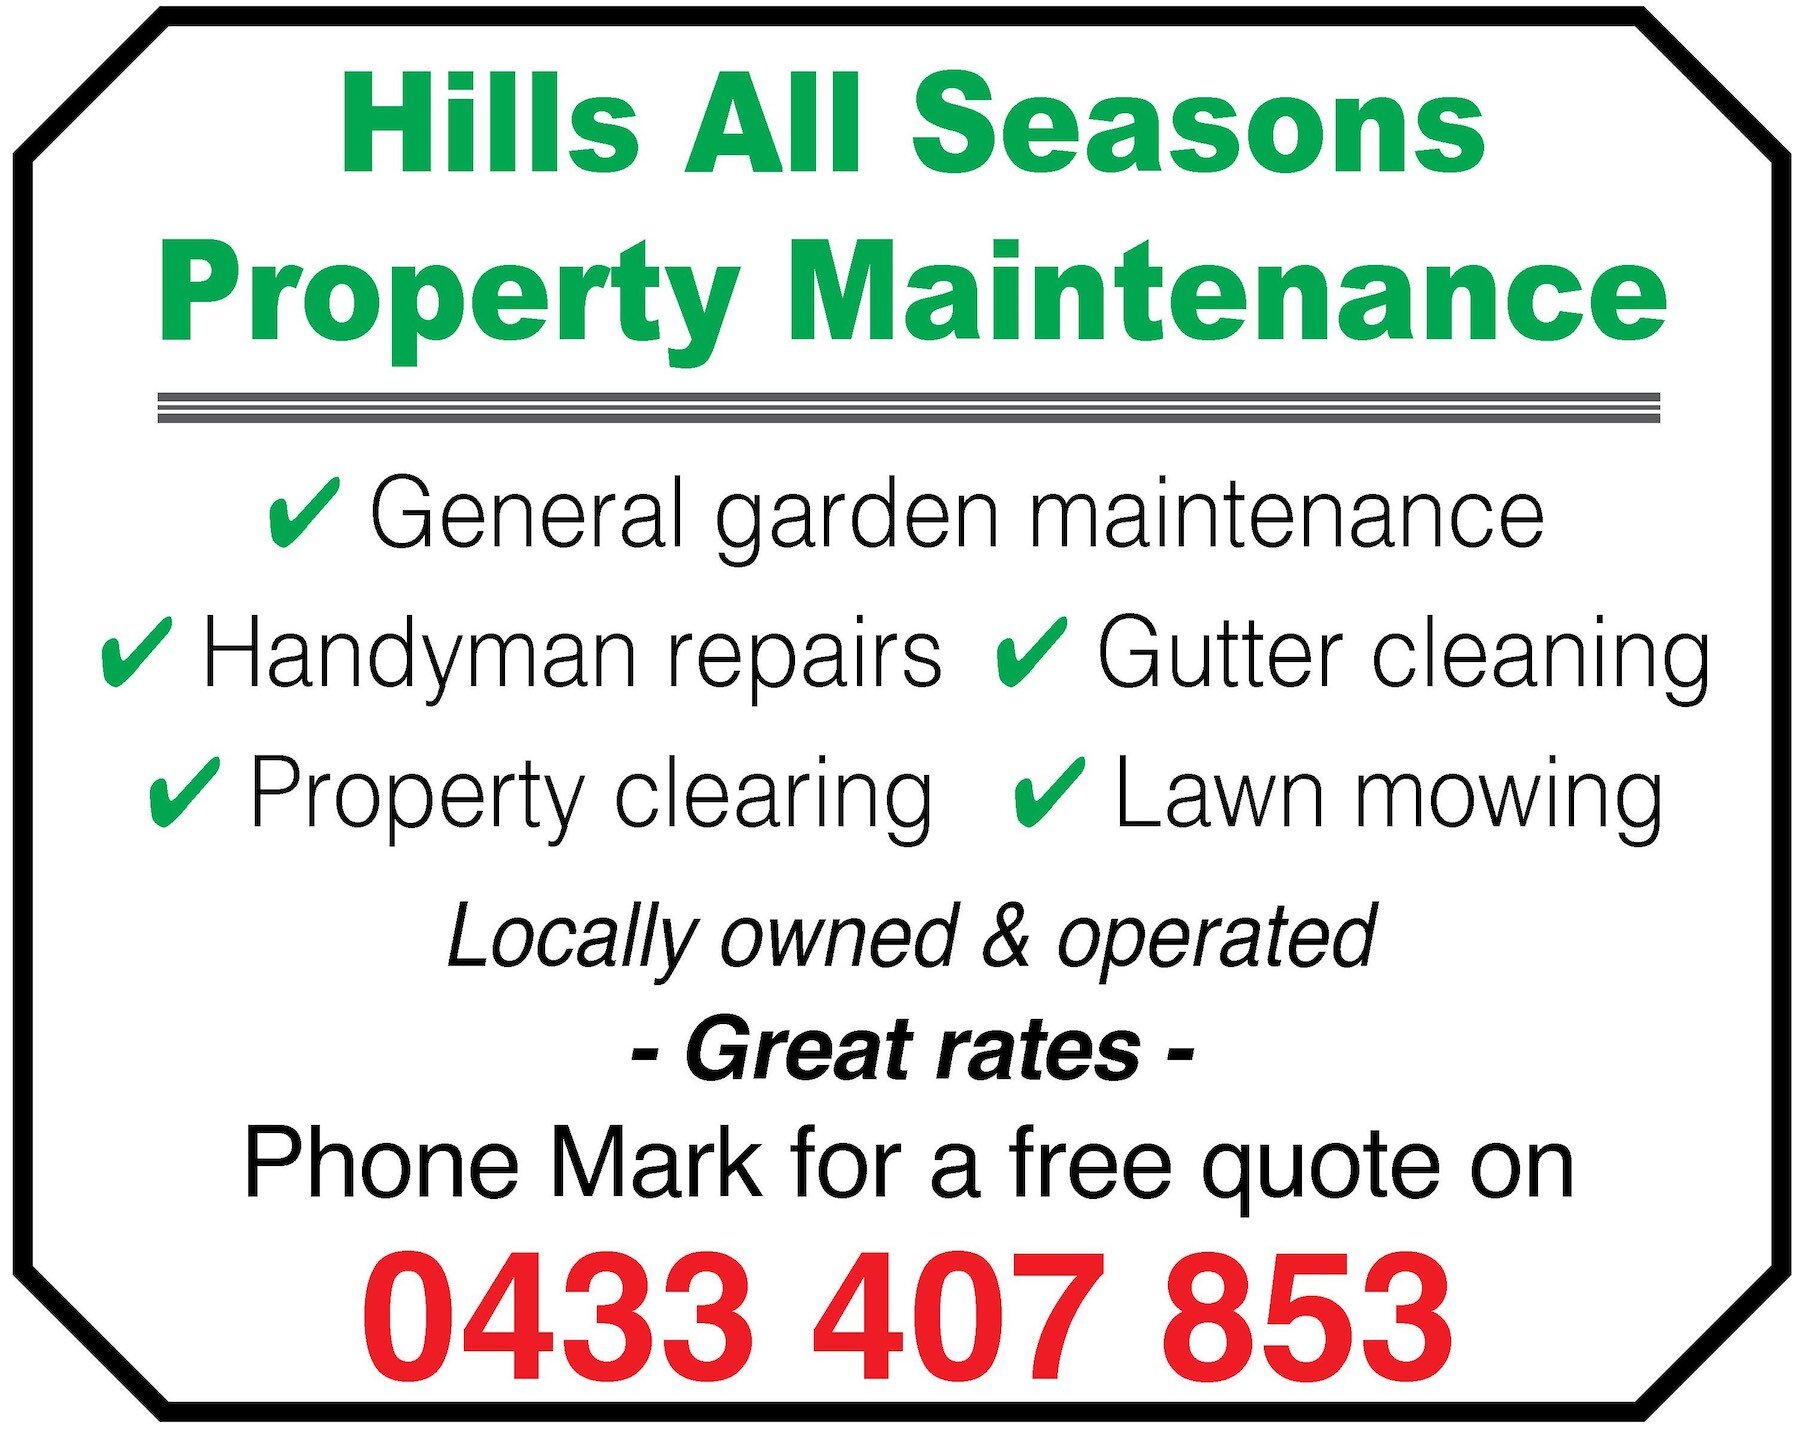 Hills All Seasons Prop Maint Advert.jpg